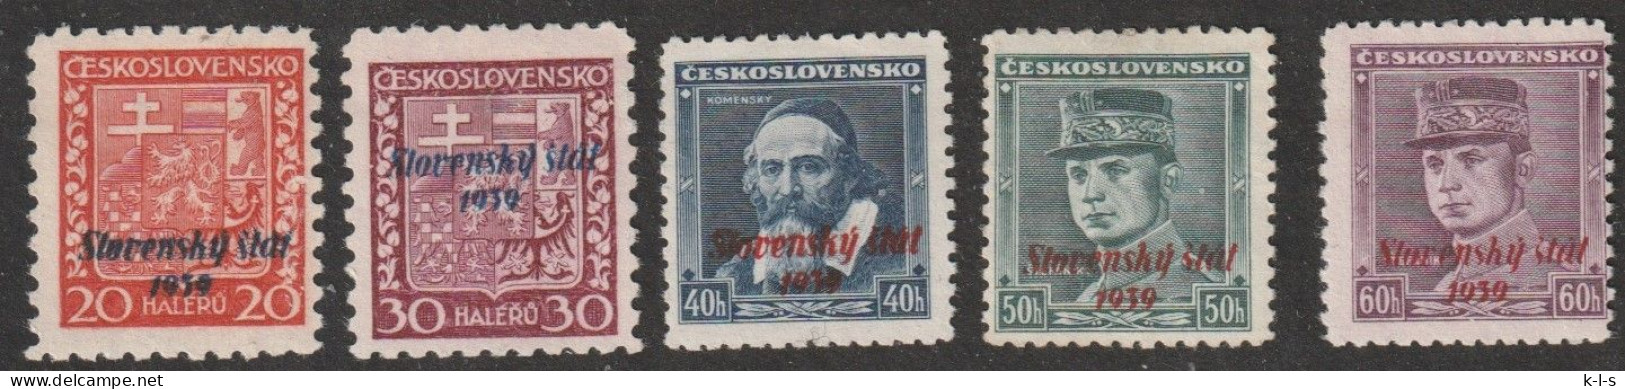 Slowakei: 1939, Freimarken. Mi. Nr. 4, 6, 7, 8, 10, Marken Der Tschechoslowakei Sowie Slowakei.   **/MNH - Nuovi